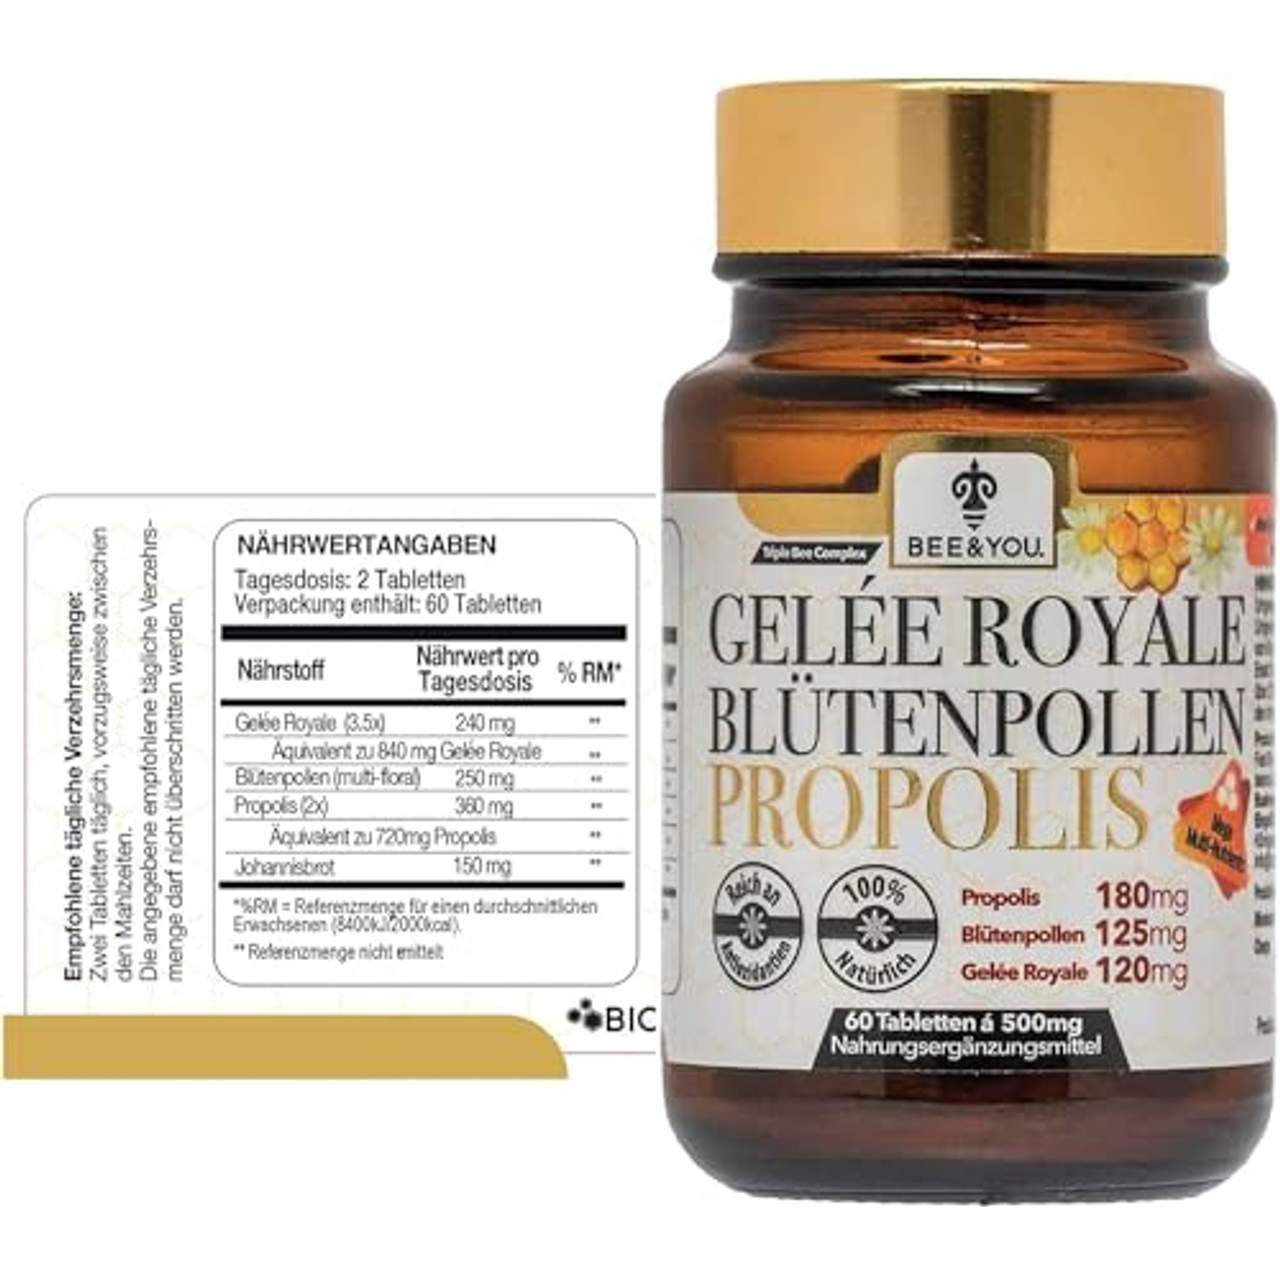 Bee&You Gelée Royale Blütenpollen Propolis Tabletten